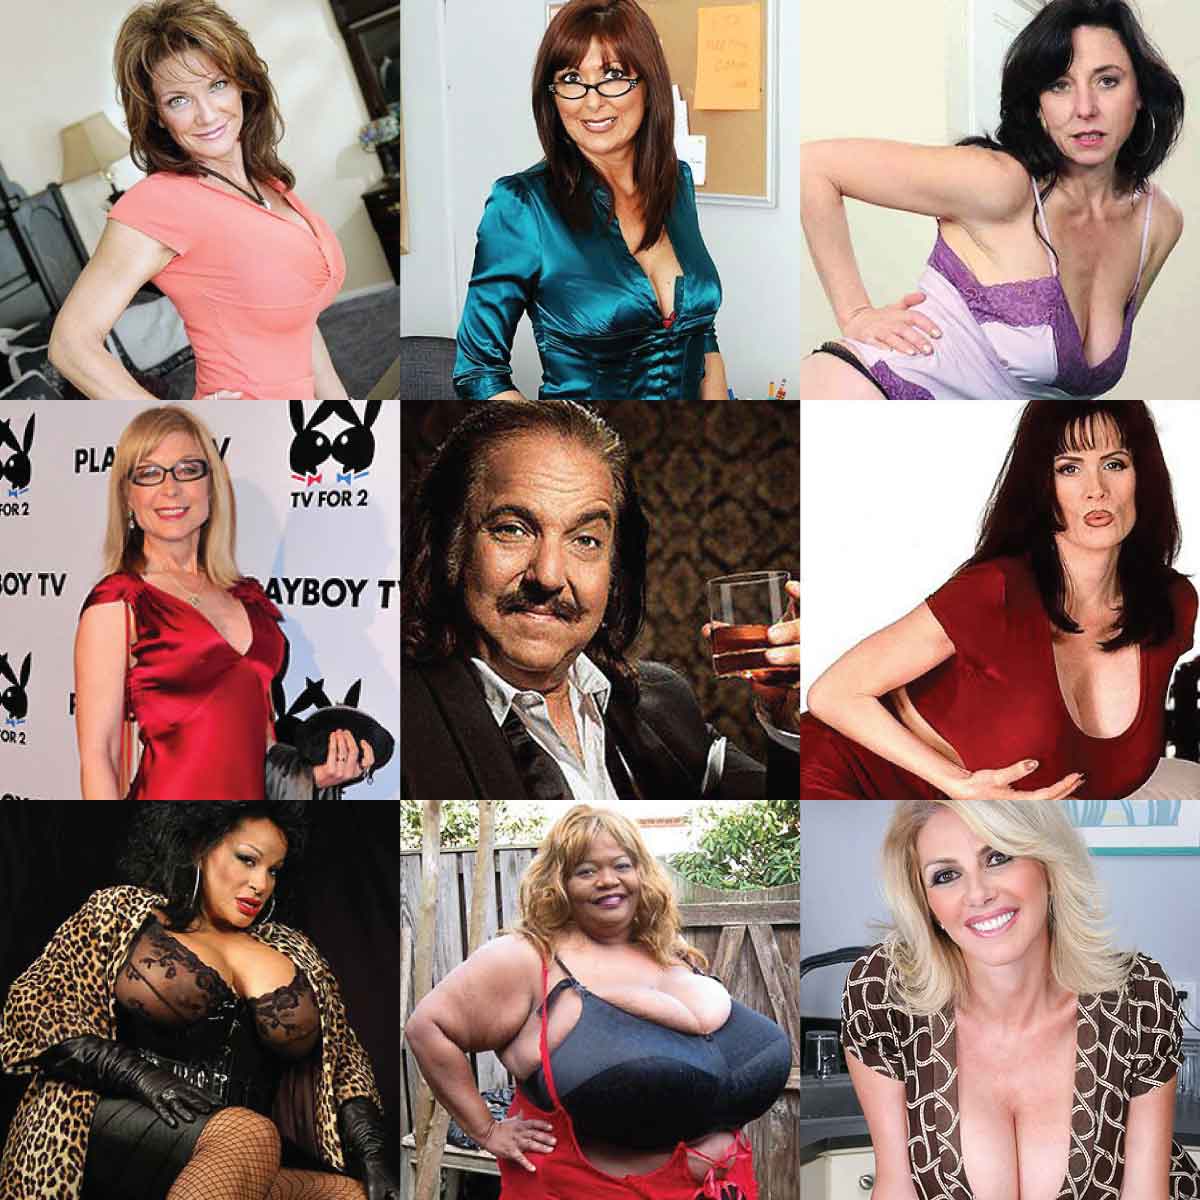 Mature Blonde Porn Stars List - Top 20 Mature Pornstars Over 50! | Coupons.xxx